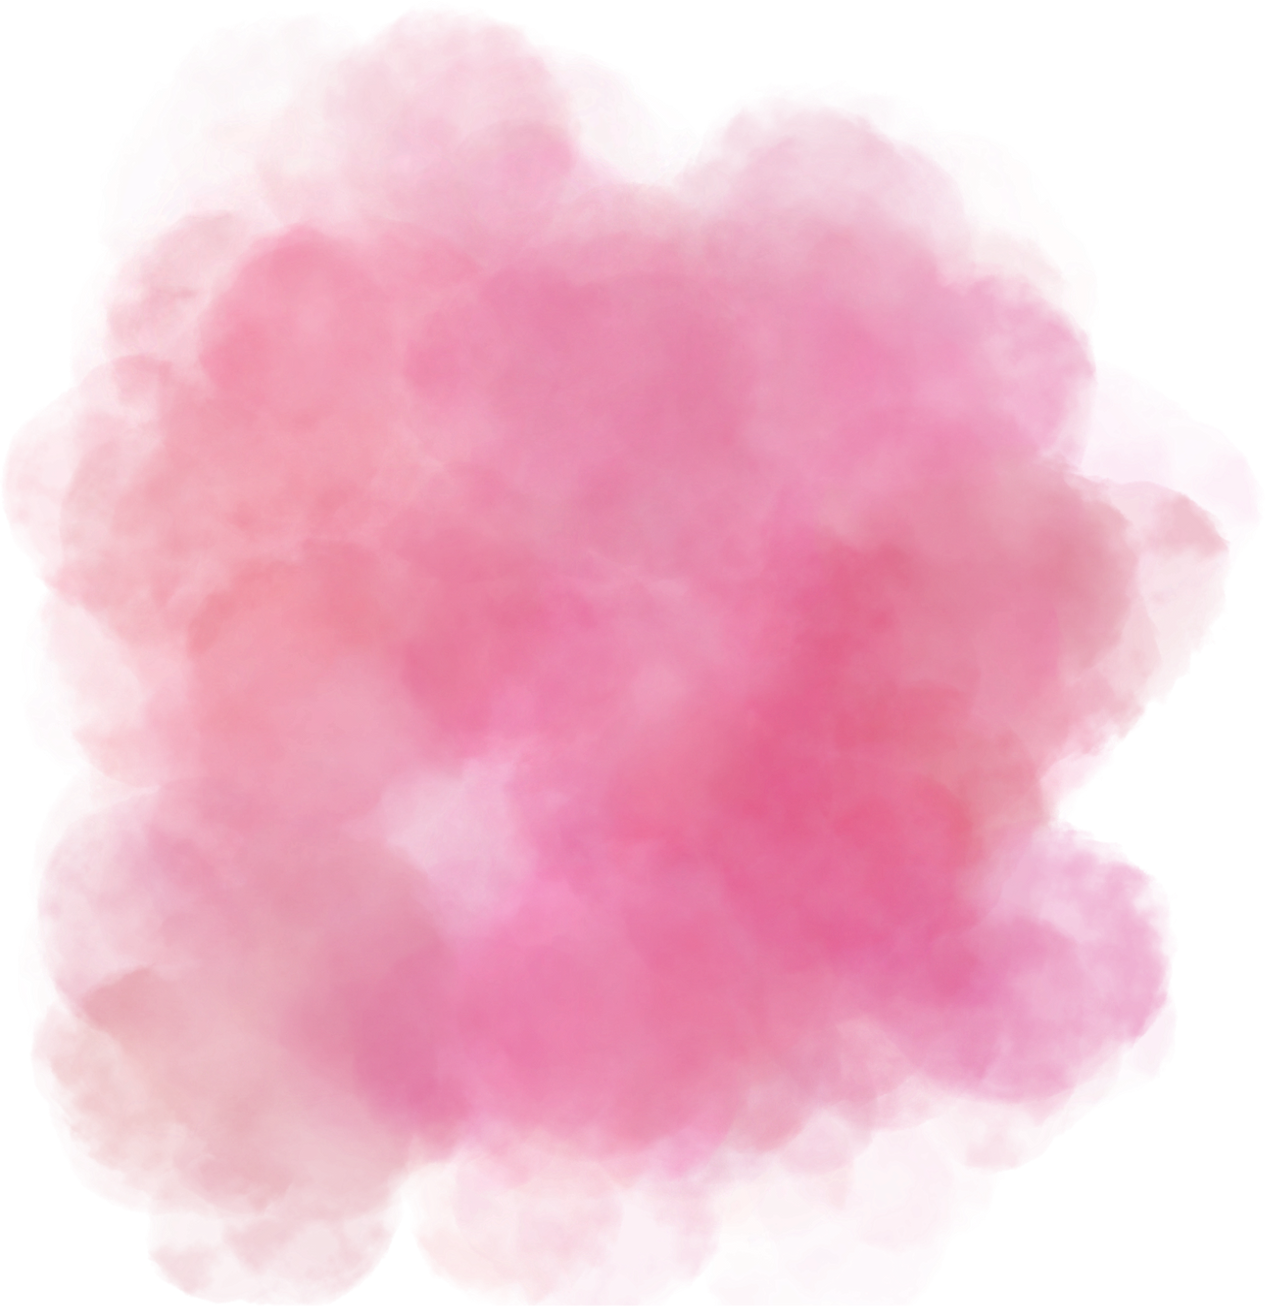 Pink watercolor splotch